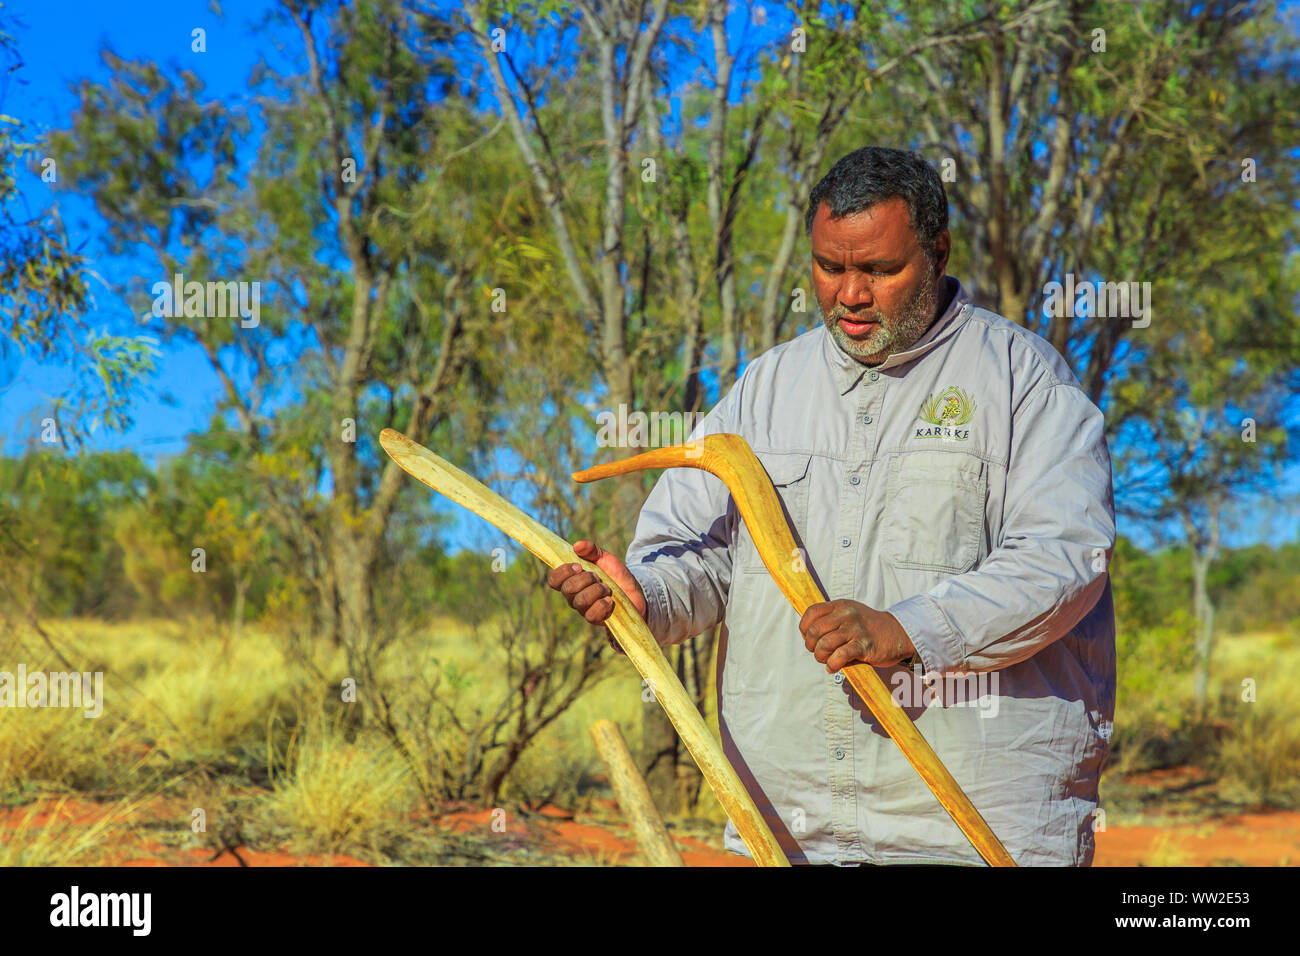 Kings Creek Station, Northern Territory, Australia - Aug 21, 2019: aboriginal Australian man holding an aboriginal weapon of boomerang used by Luritja Stock Photo